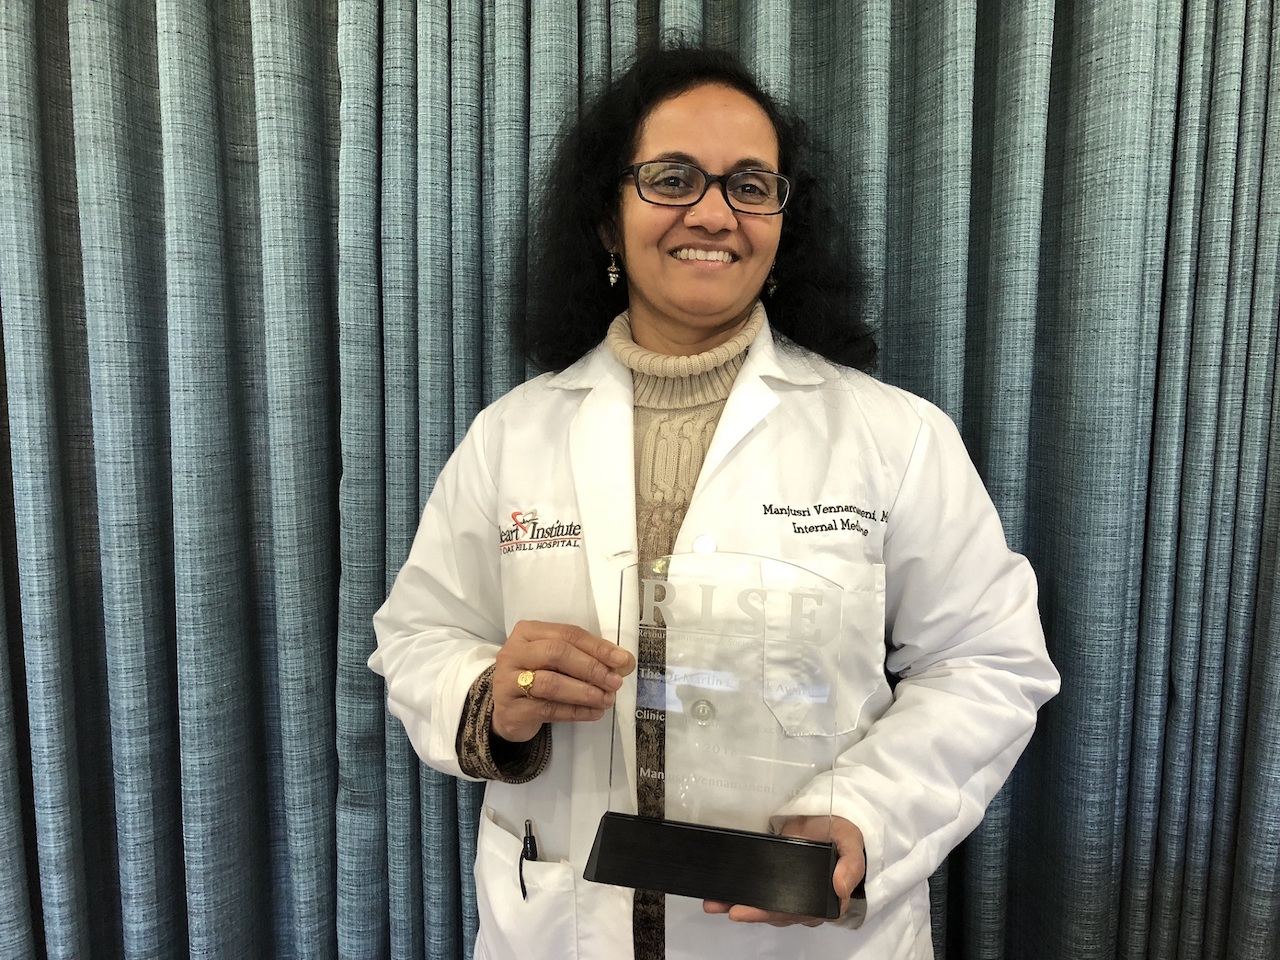 Chief Medical Director, Manjusri Vennamaneni, MD, is Awarded the 2018 Martin L. Block Award